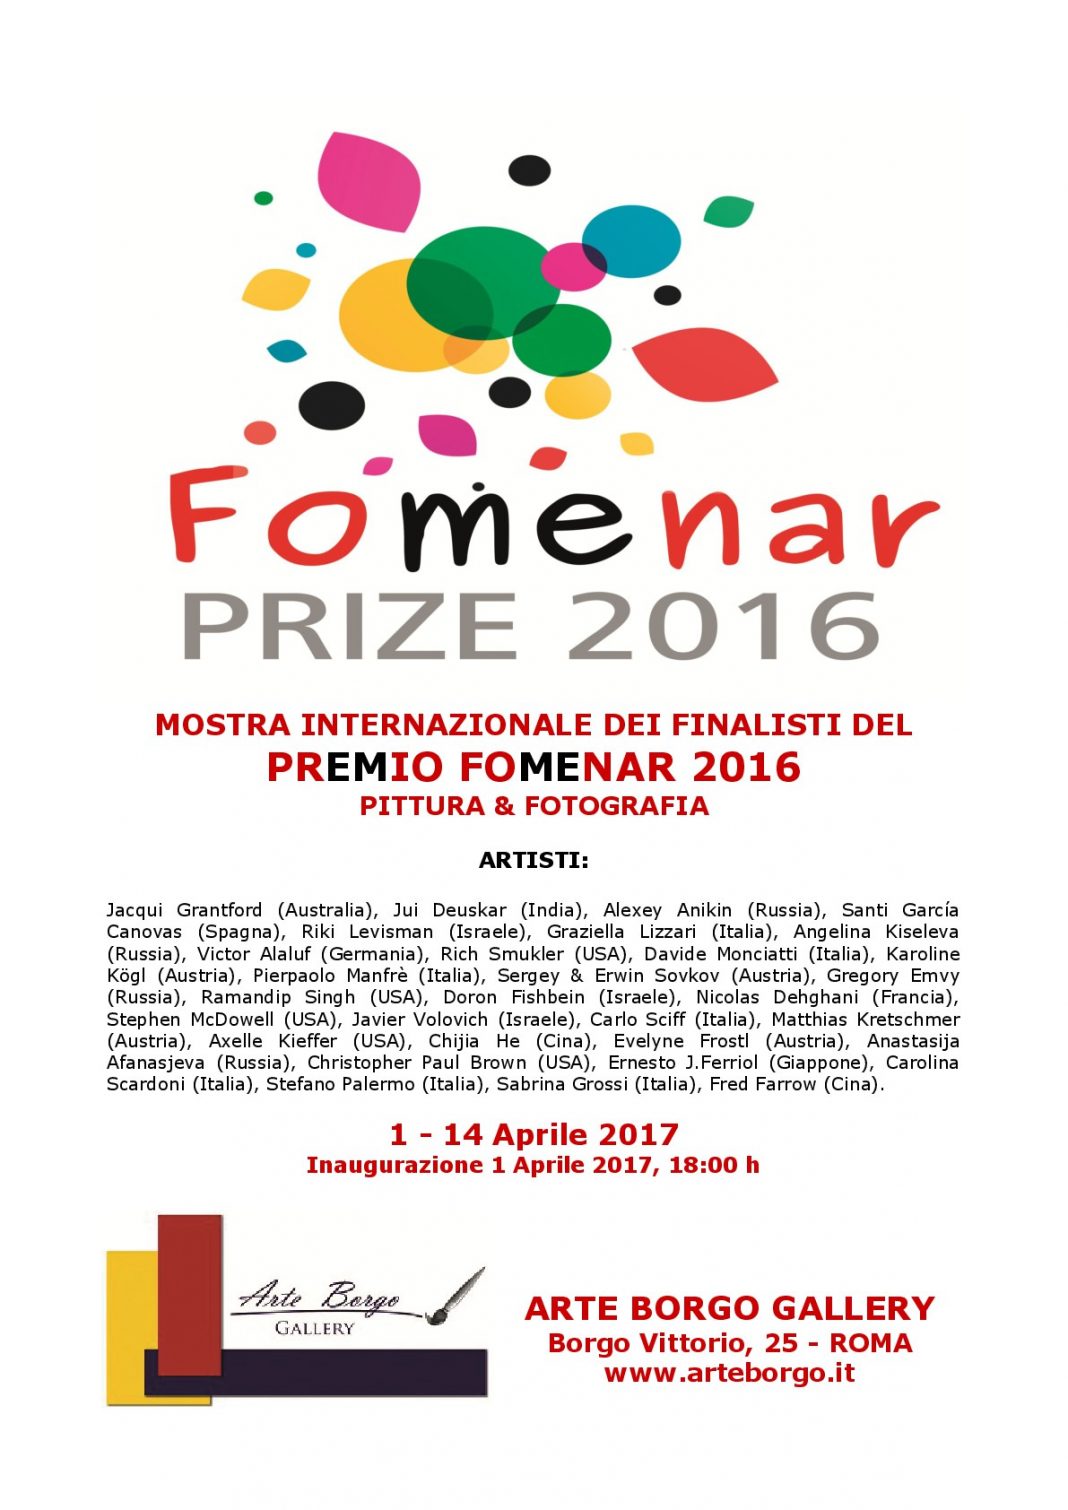 Fomenar Prize 2016https://www.exibart.com/repository/media/eventi/2017/03/fomenar-prize-2016-1068x1510.jpg